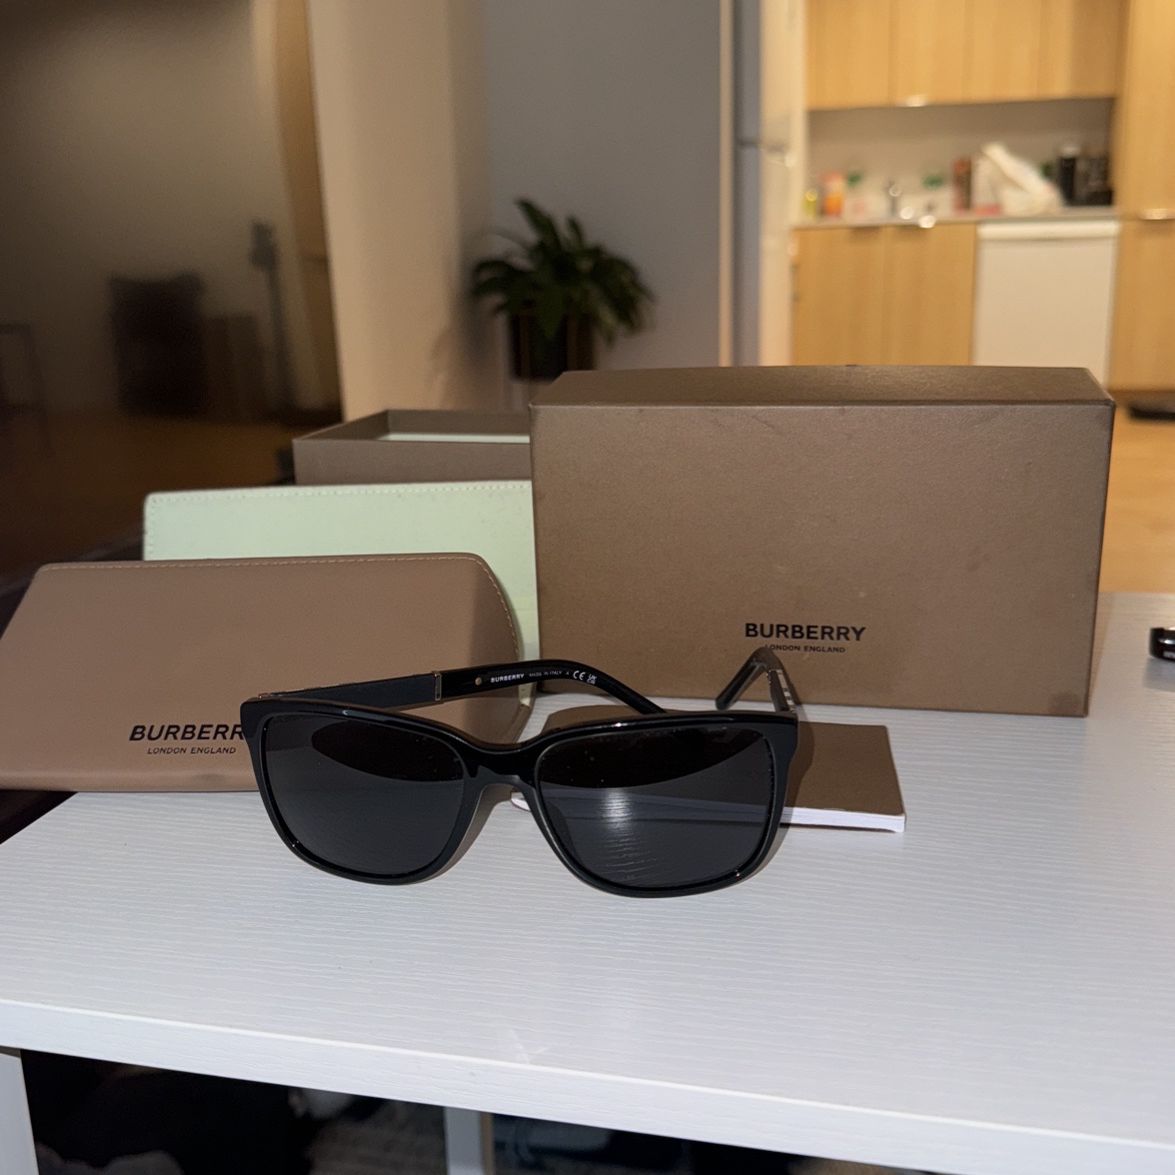 Burberry Men’s Sunglasses With Case And Original Box 